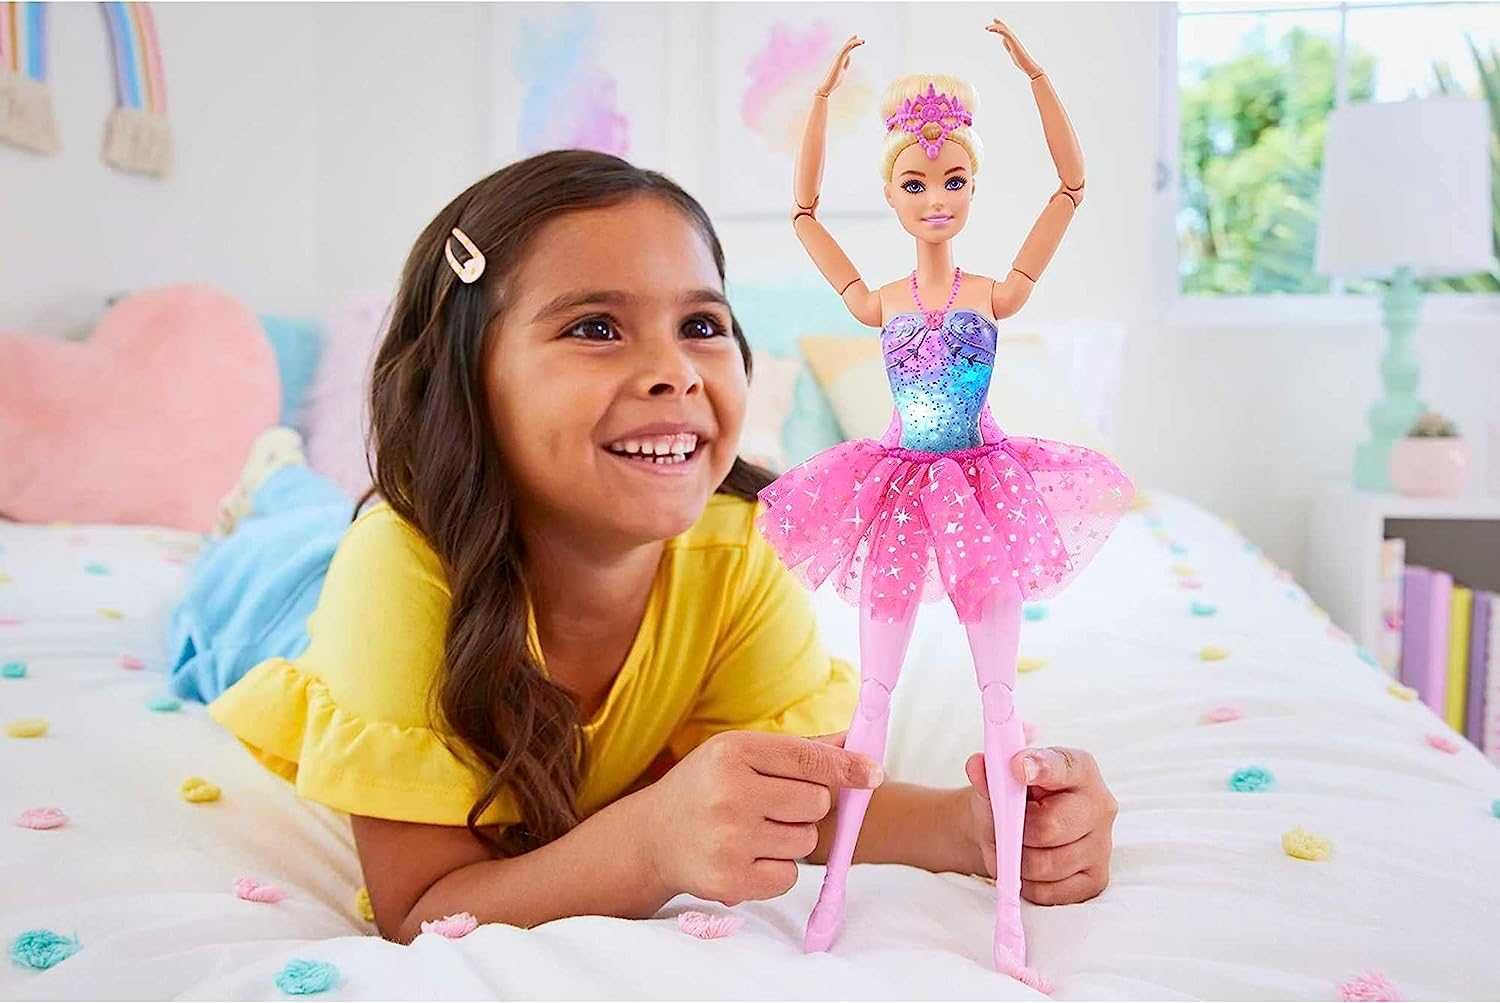 ОРИГИНАЛ! Барби Балерина со светом Barbie Dreamtopia Lights Ballerina